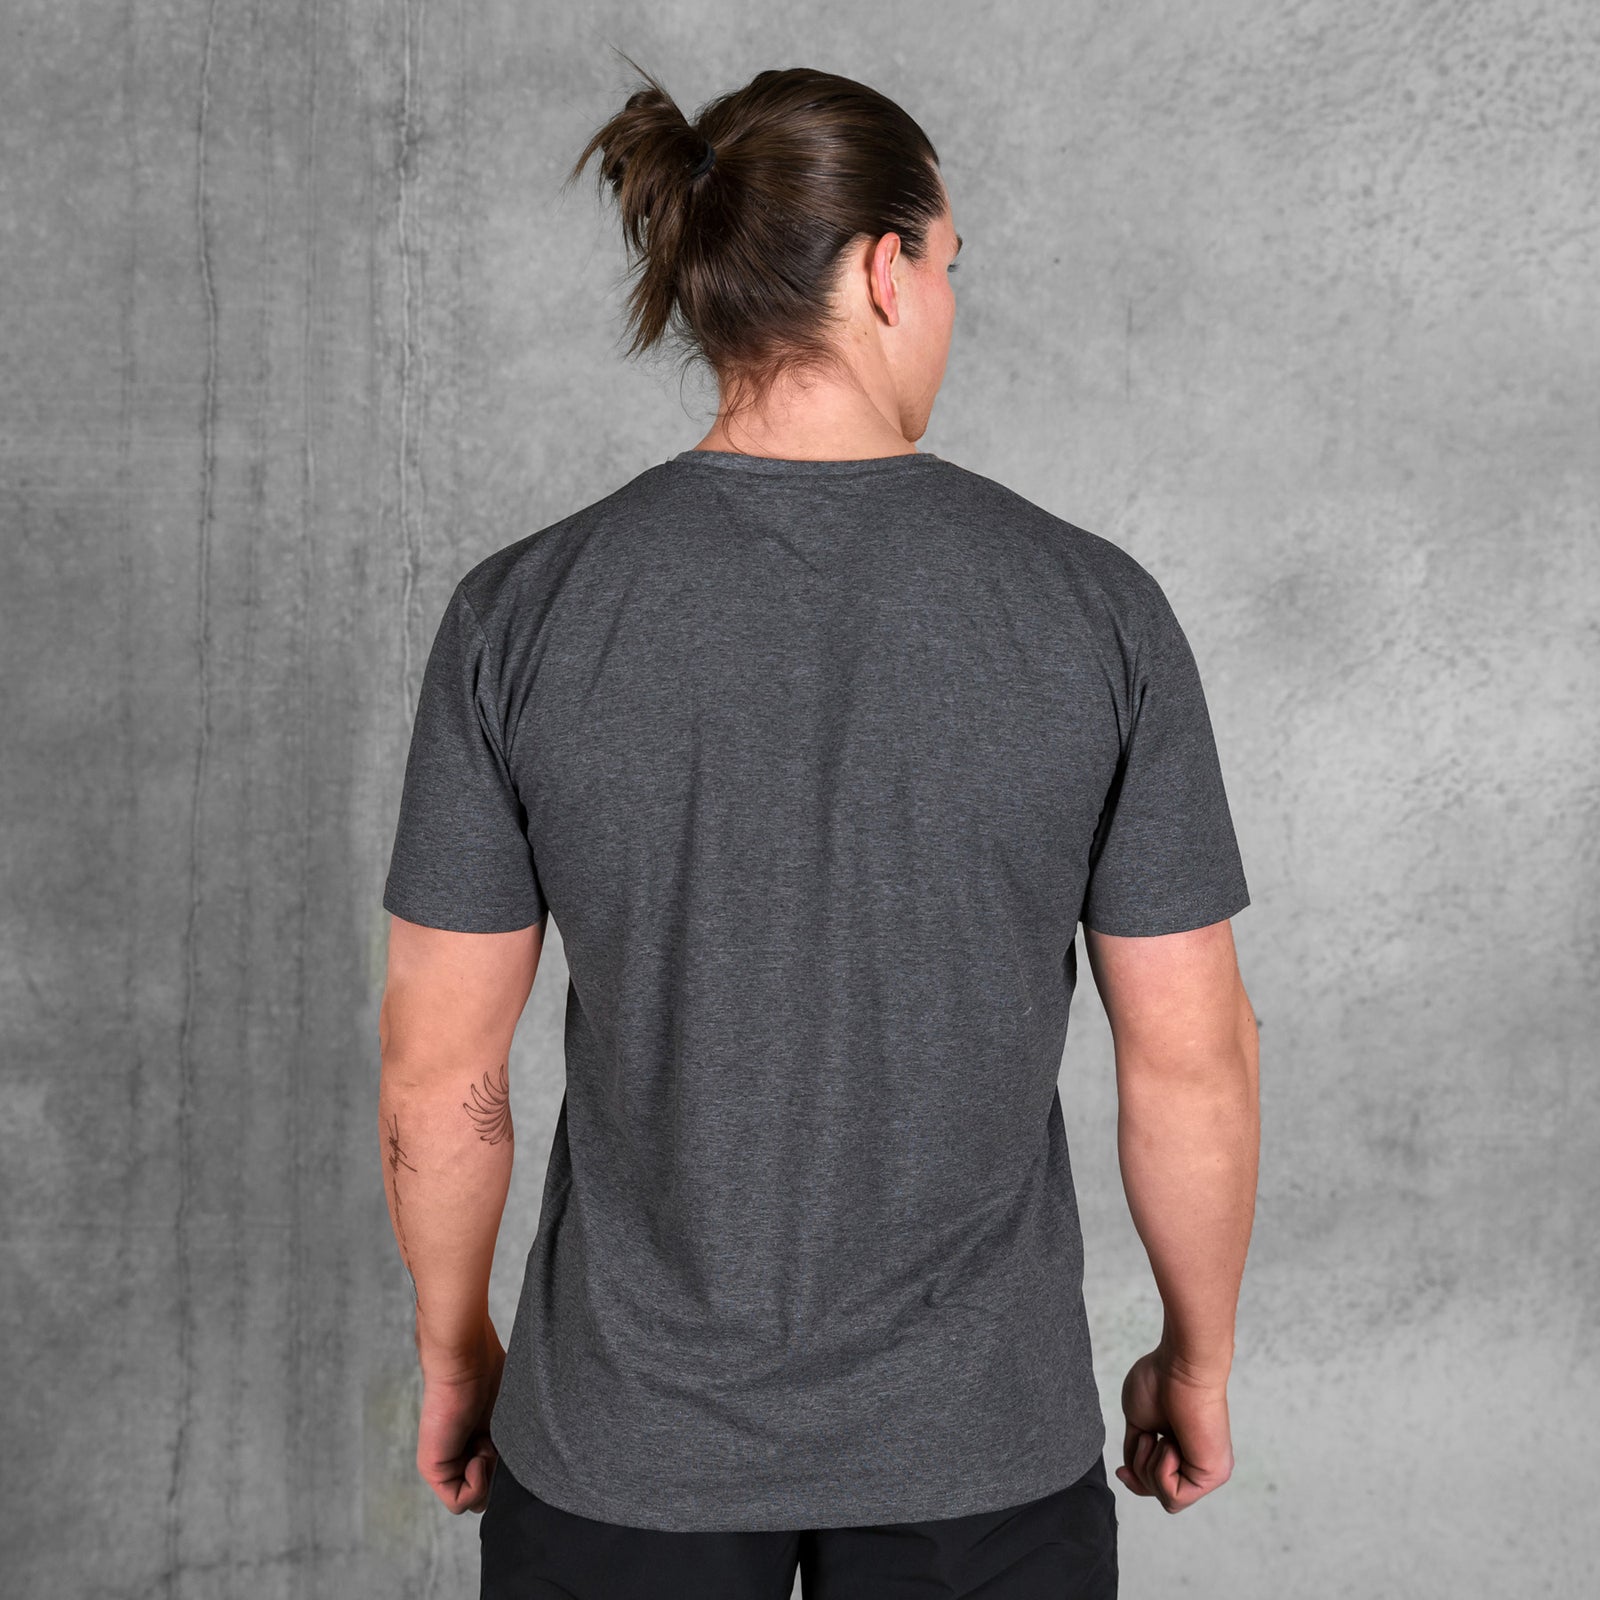 Charcoal Marl V Neck Gym T-Shirt, Active